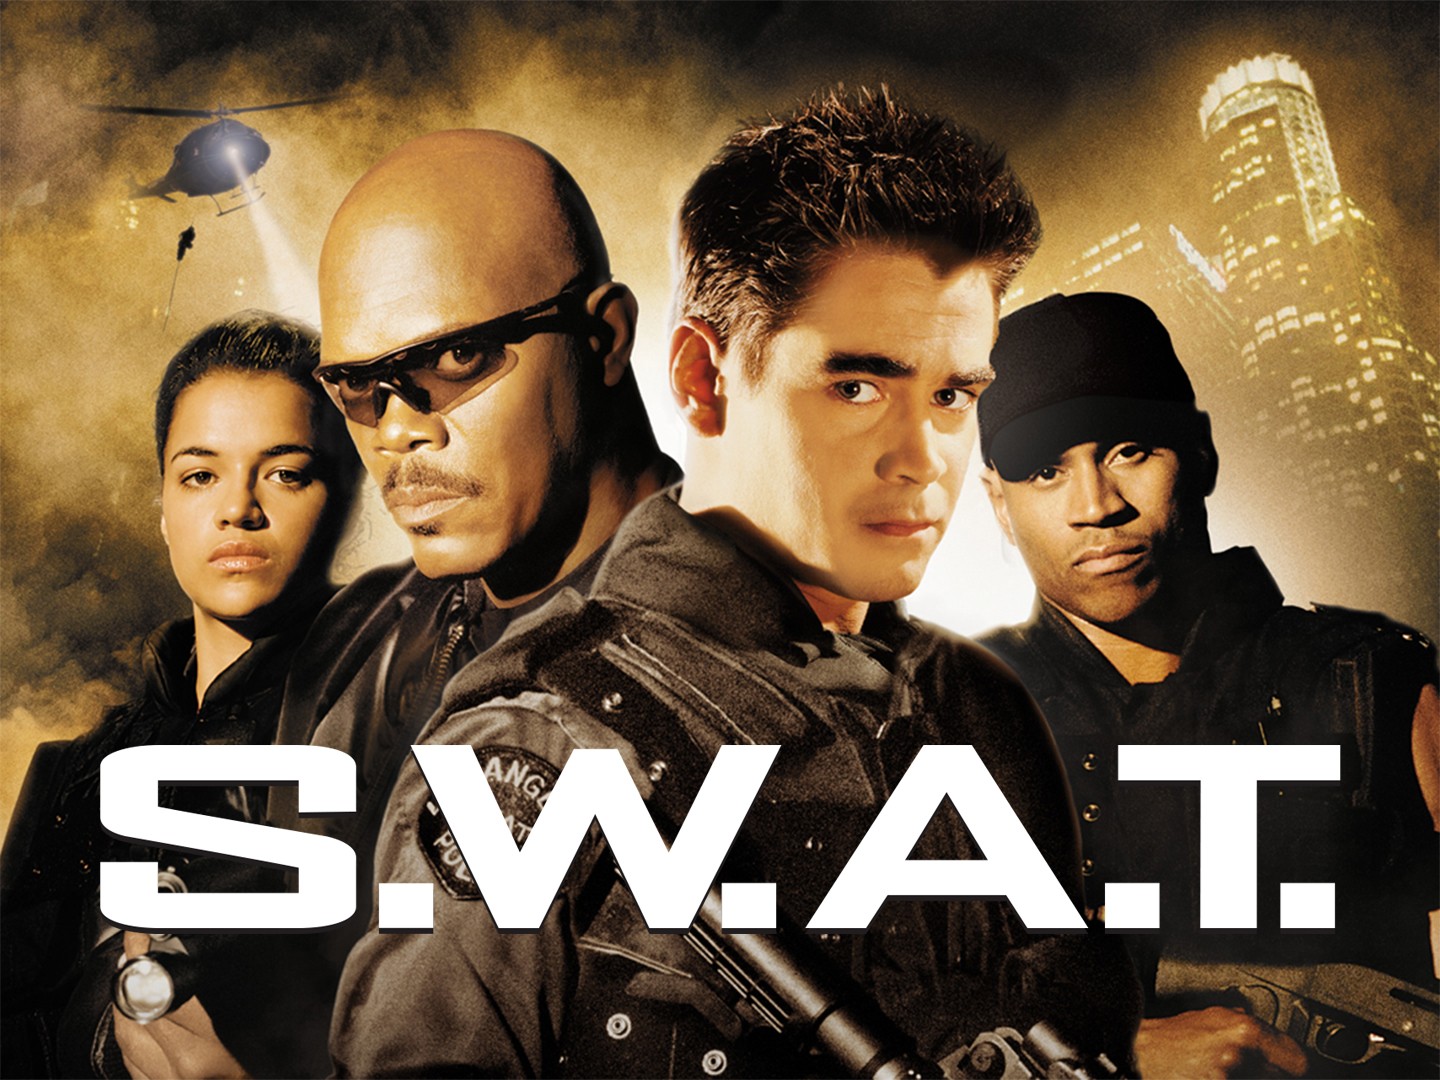 swat movie actors